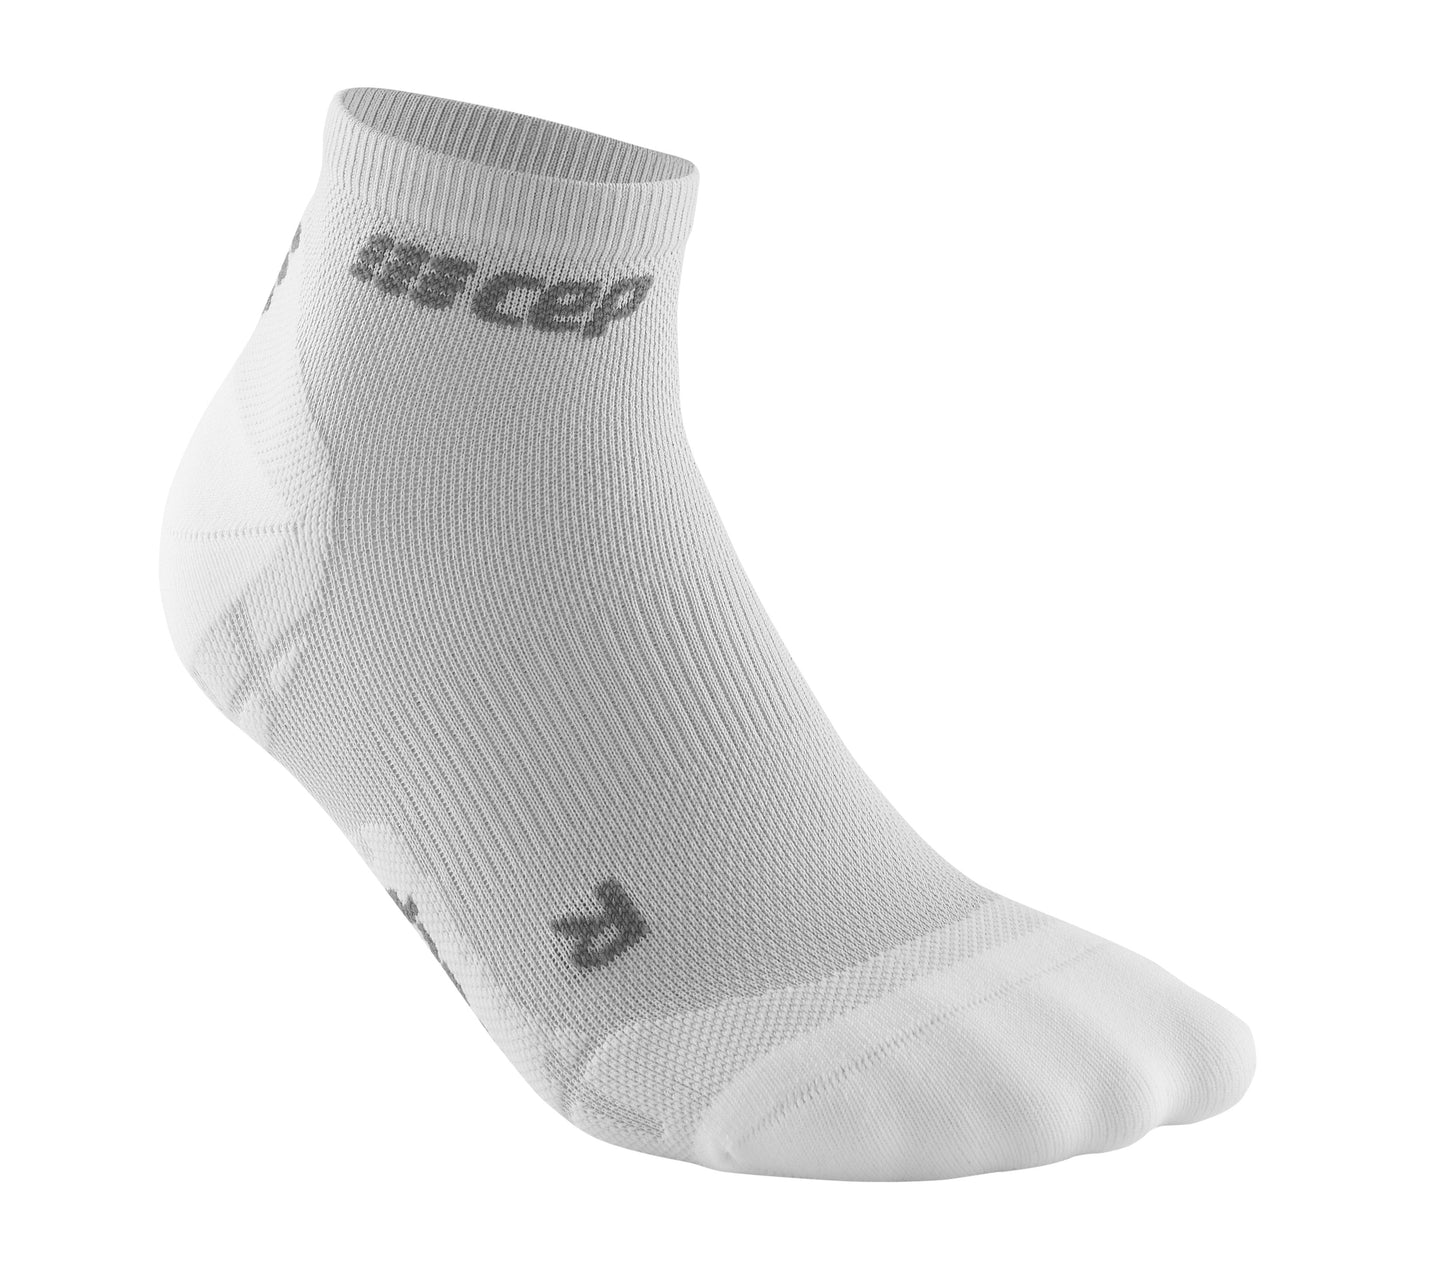 CEP Ultralight  Low Cut Compression Sock Men's - Carbon White